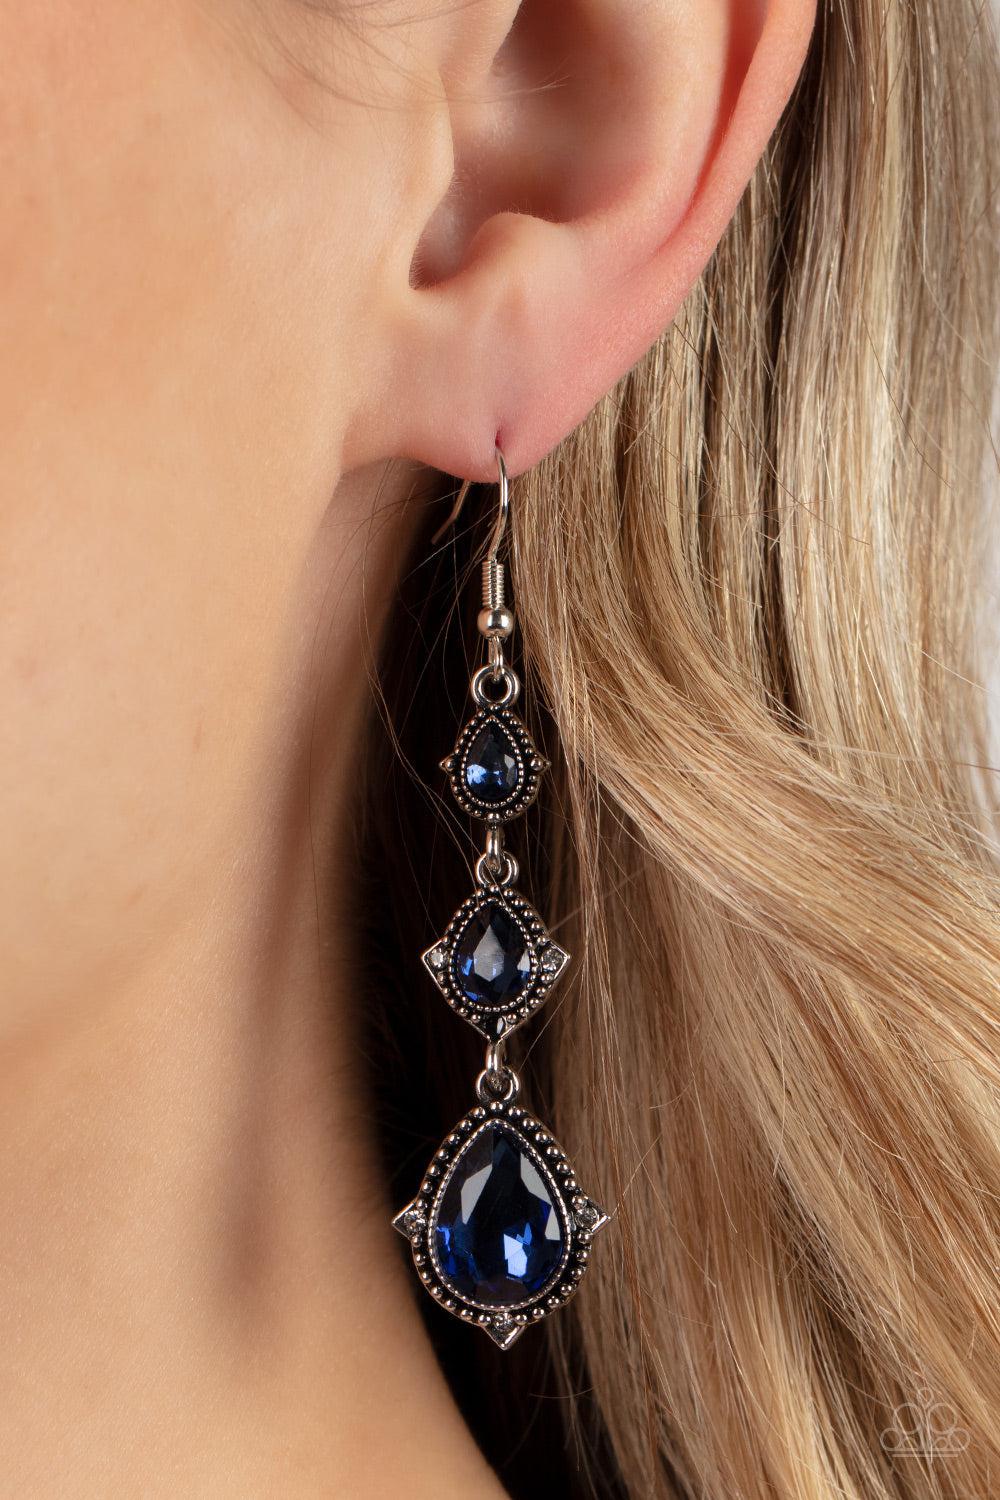 Prague Princess Blue Rhinestone Earrings - Paparazzi Accessories- lightbox - CarasShop.com - $5 Jewelry by Cara Jewels